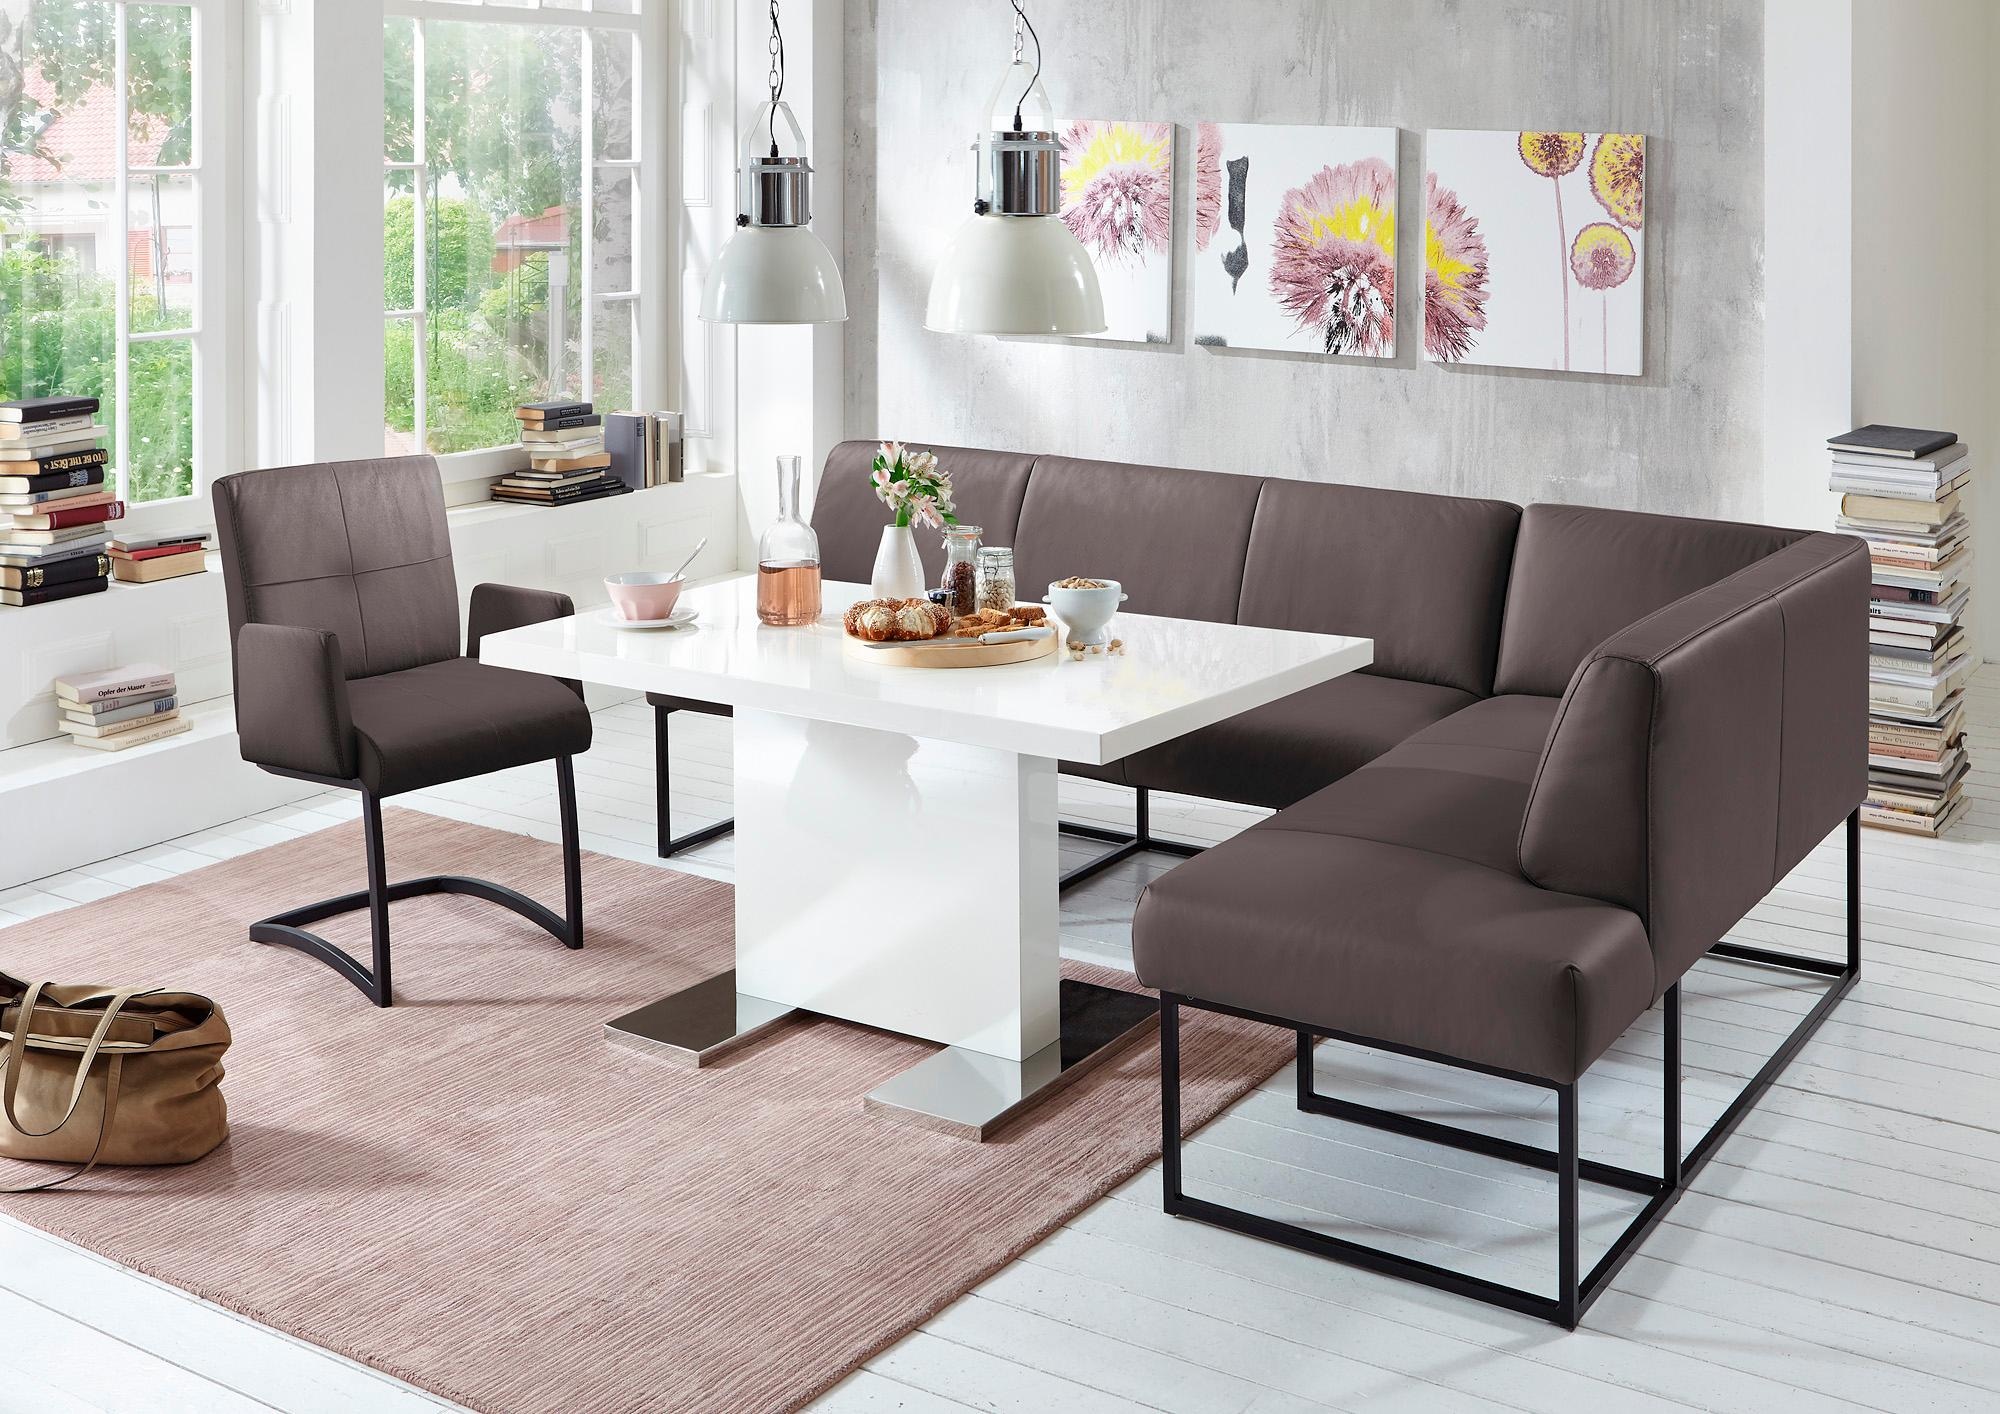 - Frei sofa kaufen im exxpo »Affogato«, stellbar Raum fashion Eckbank jetzt